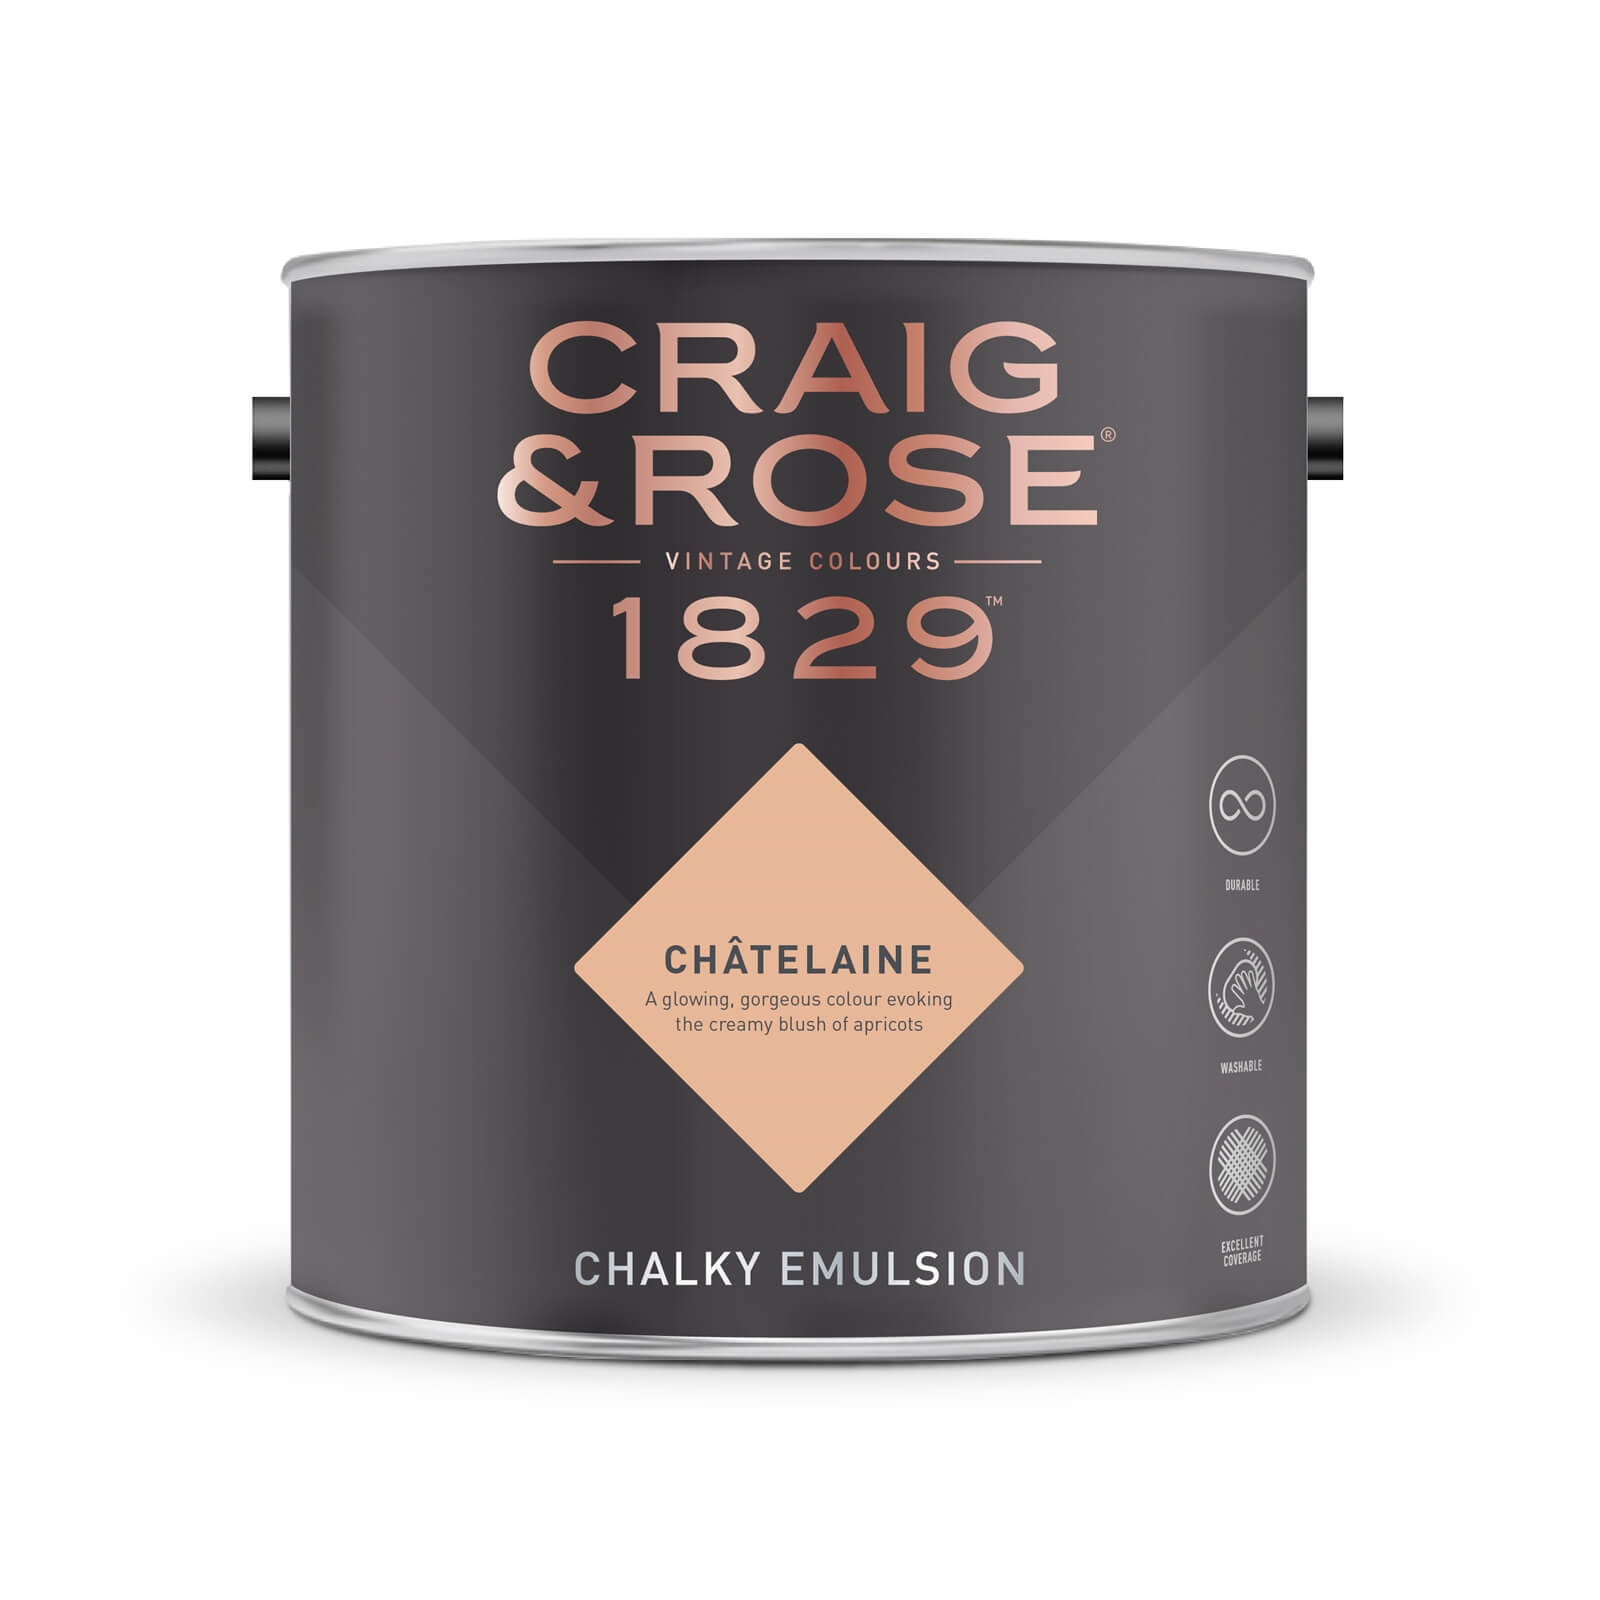 Craig & Rose 1829 Chalky Emulsion Paint Chatelaine - 2.5L